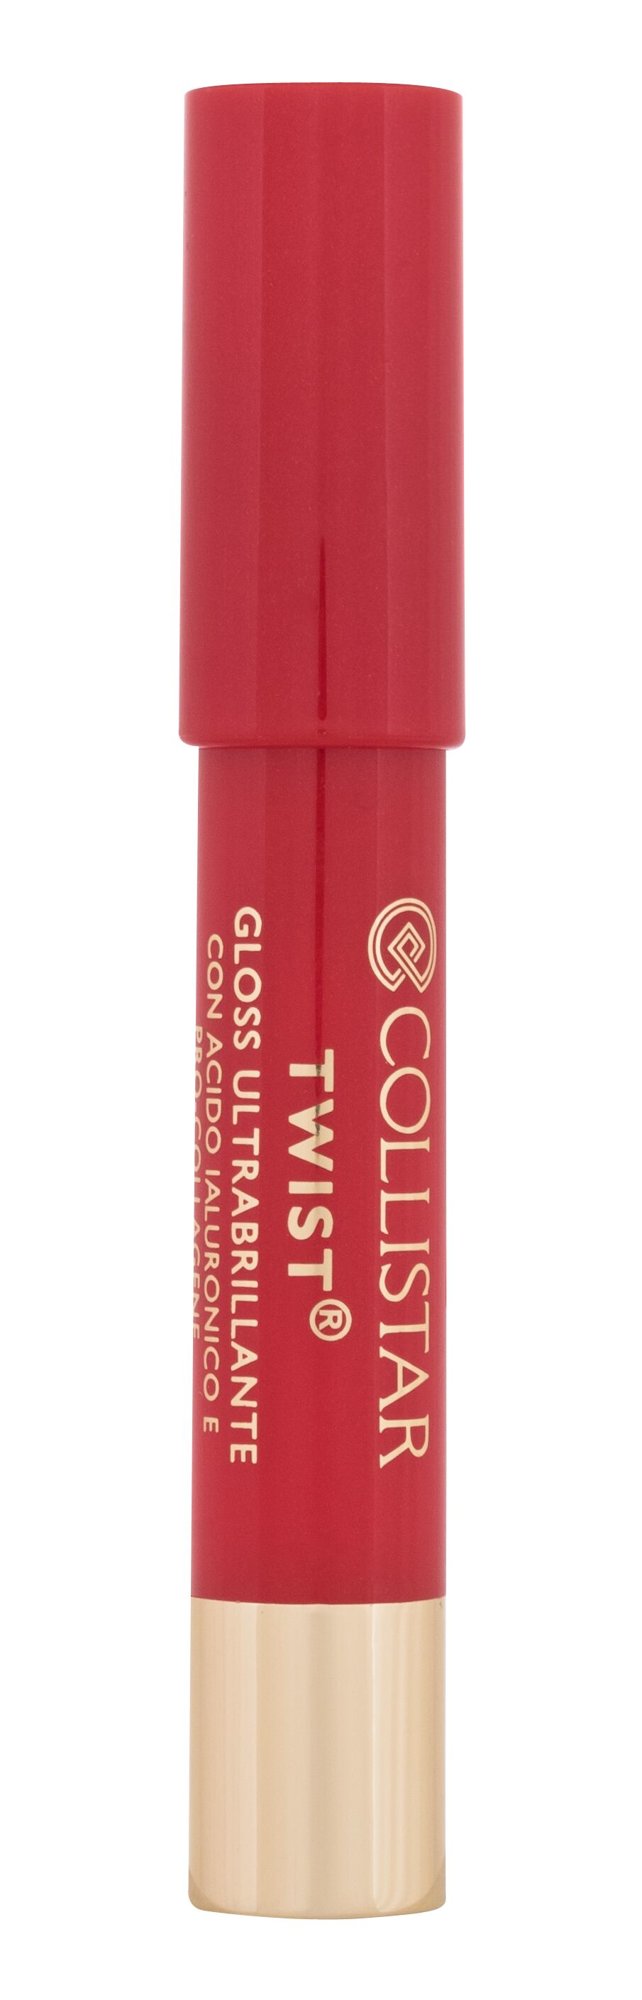 Collistar Twist Ultra-Shiny Gloss 4g lūpų blizgesys Testeris